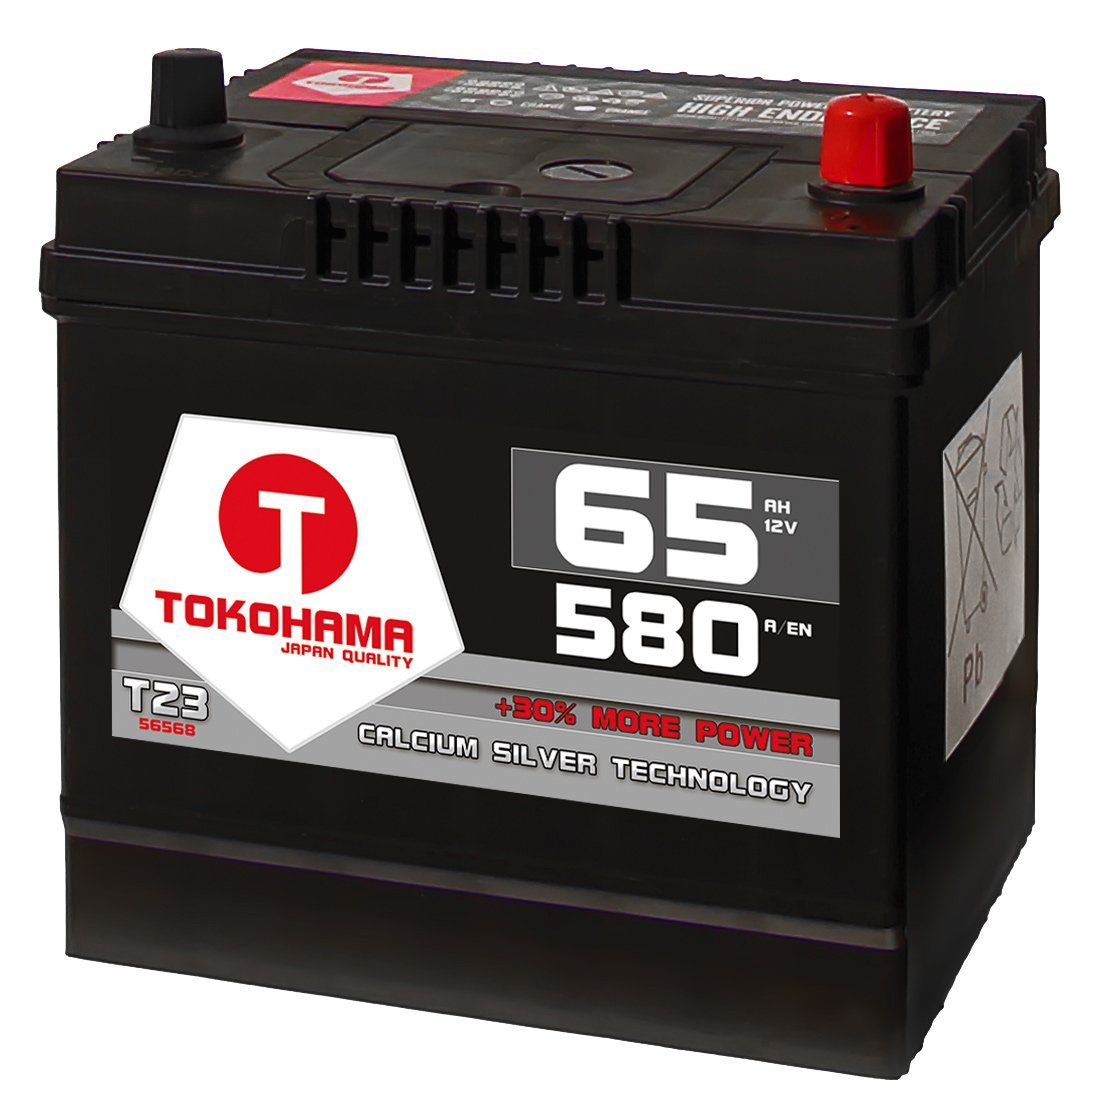 Tokohama Autobatterie 65Ah 580A/EN Asia Japan Starter Batterie Plus Pol Rechts ersetzt 60Ah 12V 56068 von T TOKOHAMA JAPAN QUALITY